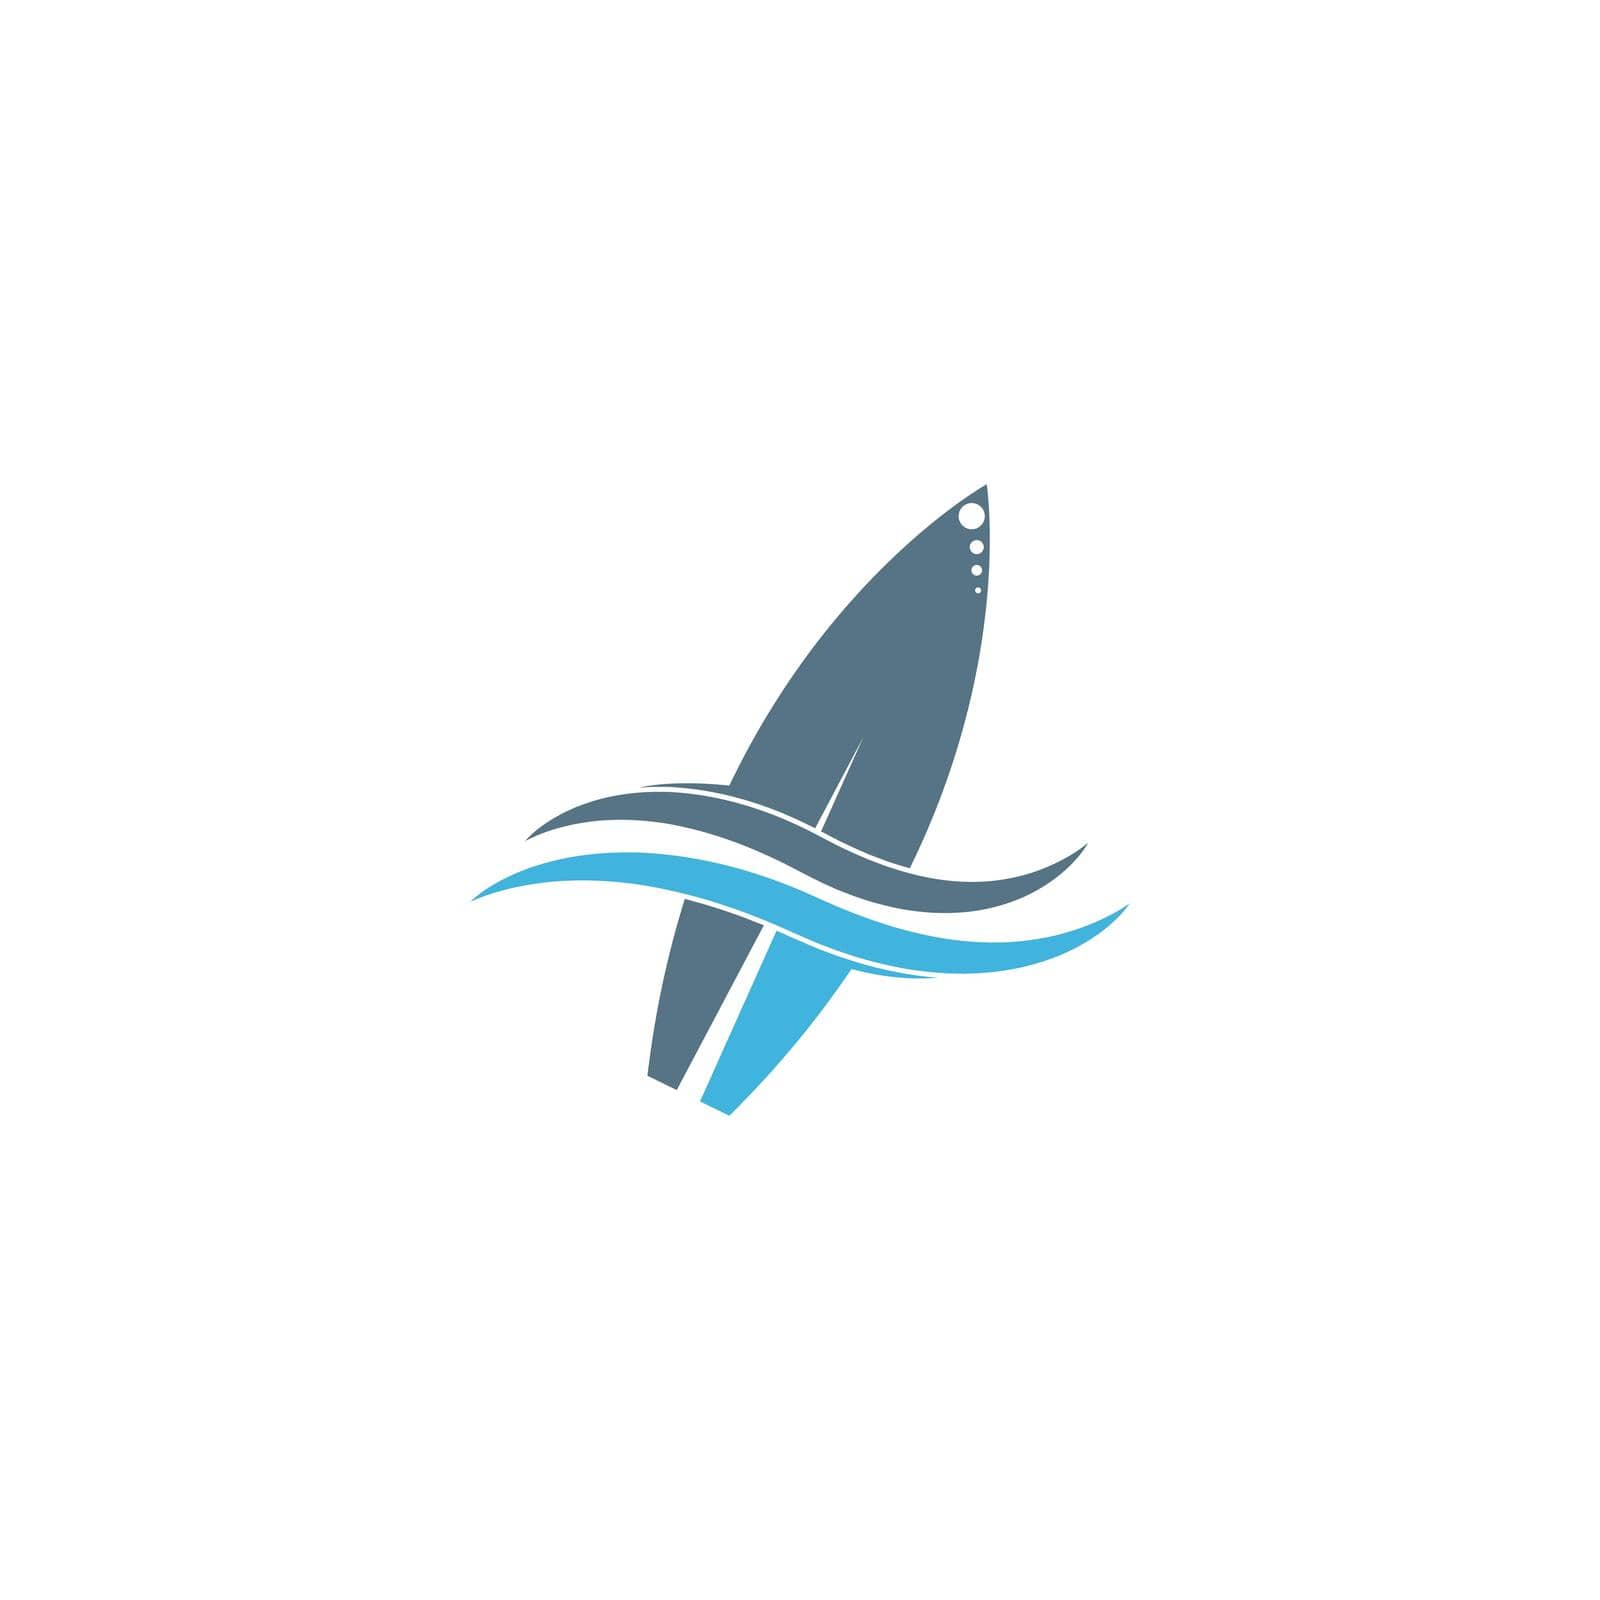 Surfing board icon logo design vector template illustration